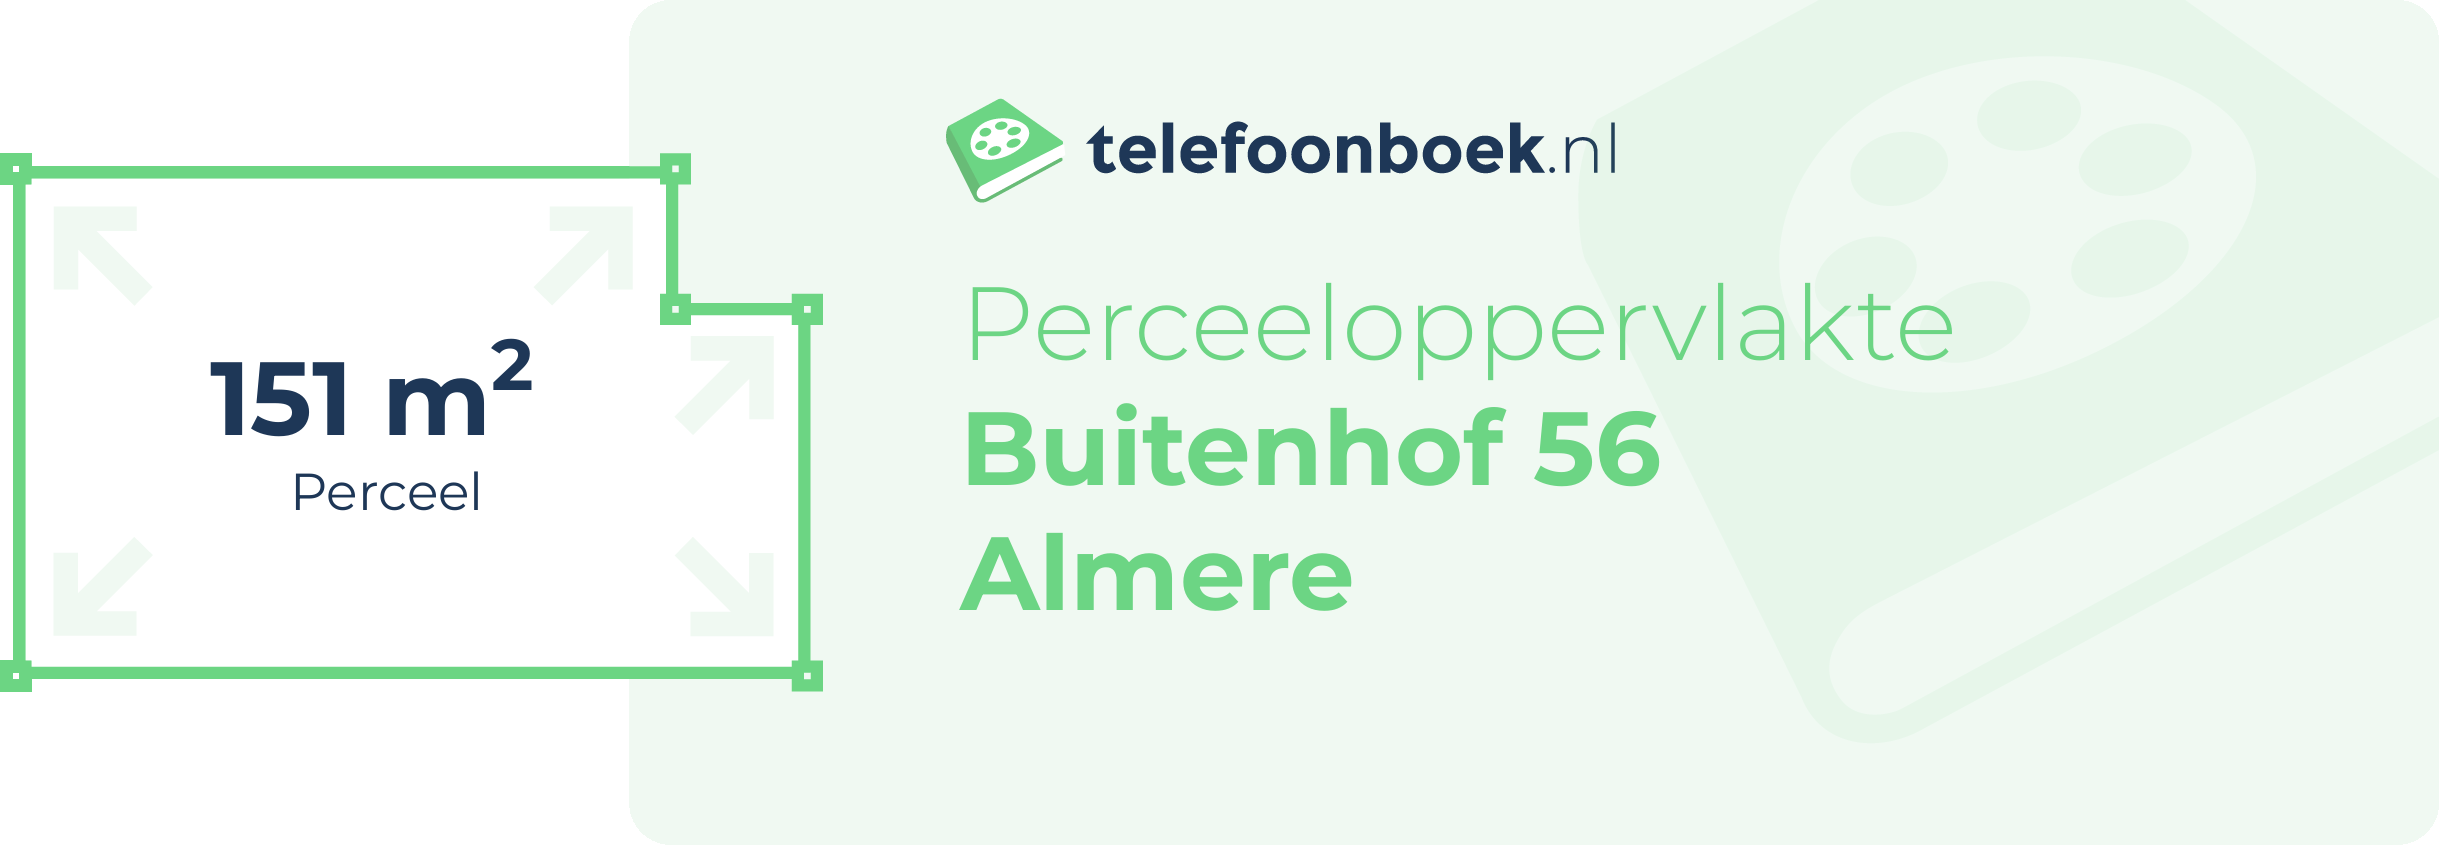 Perceeloppervlakte Buitenhof 56 Almere